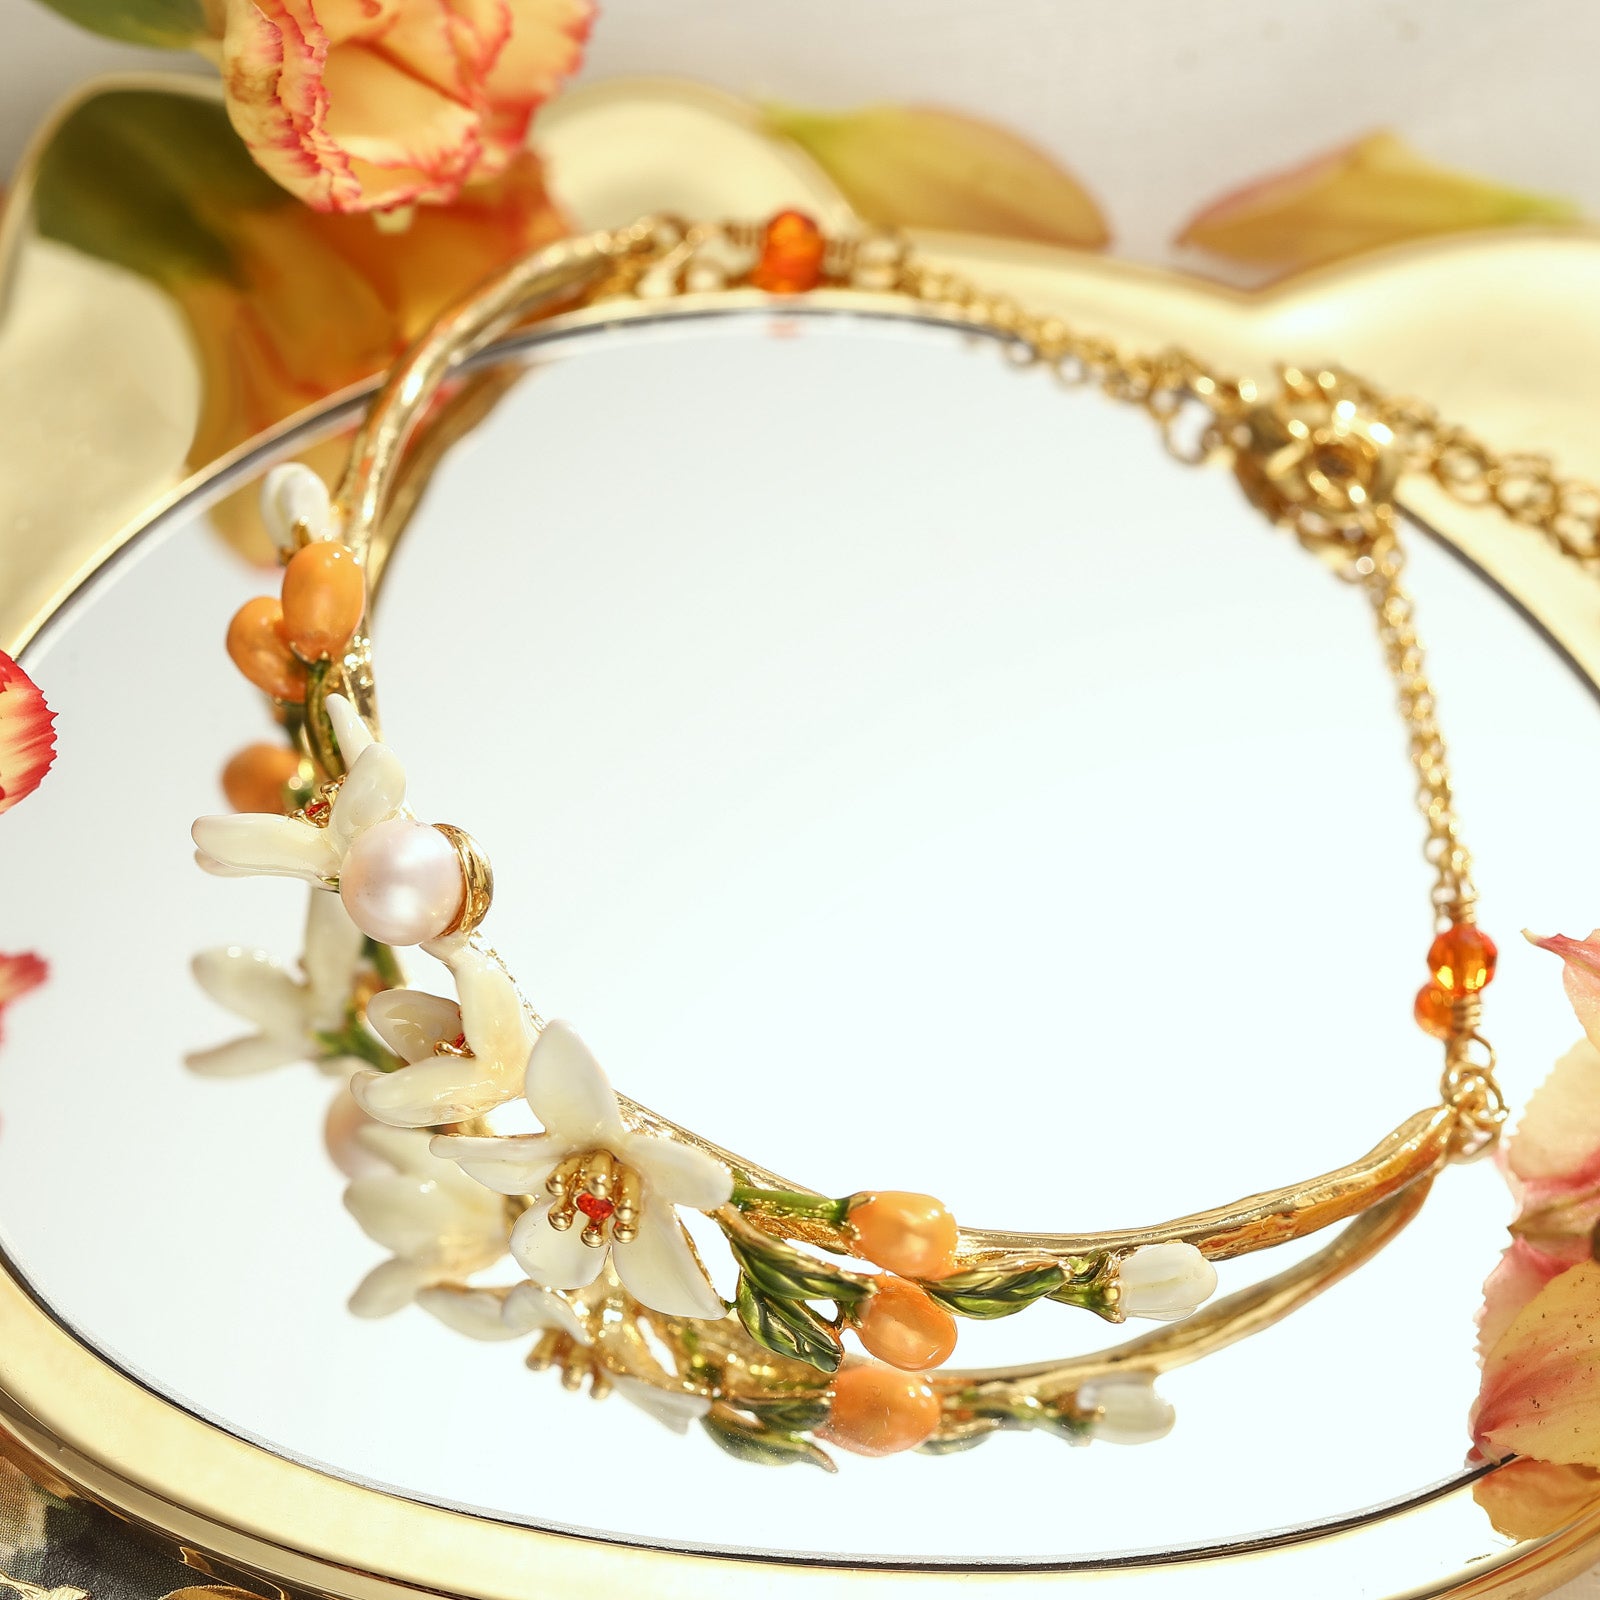 orange blossom thin bracelet